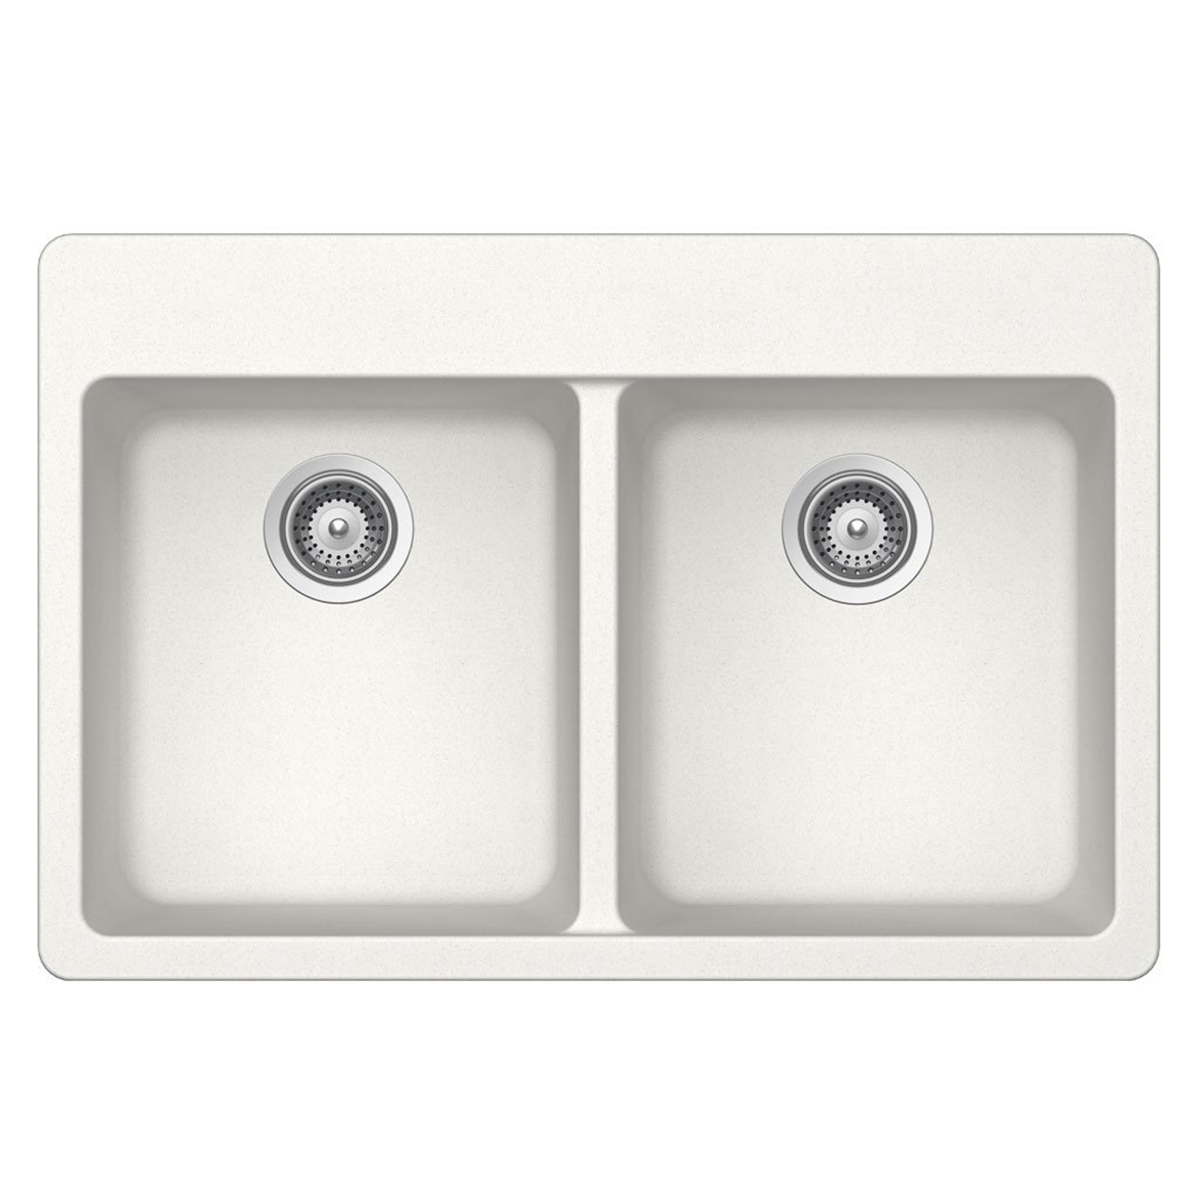 Pelican Int'l Crystallite Series PL-200 33" x 22" Alpina Granite Composite Topmount/ Undermount Kitchen Sink